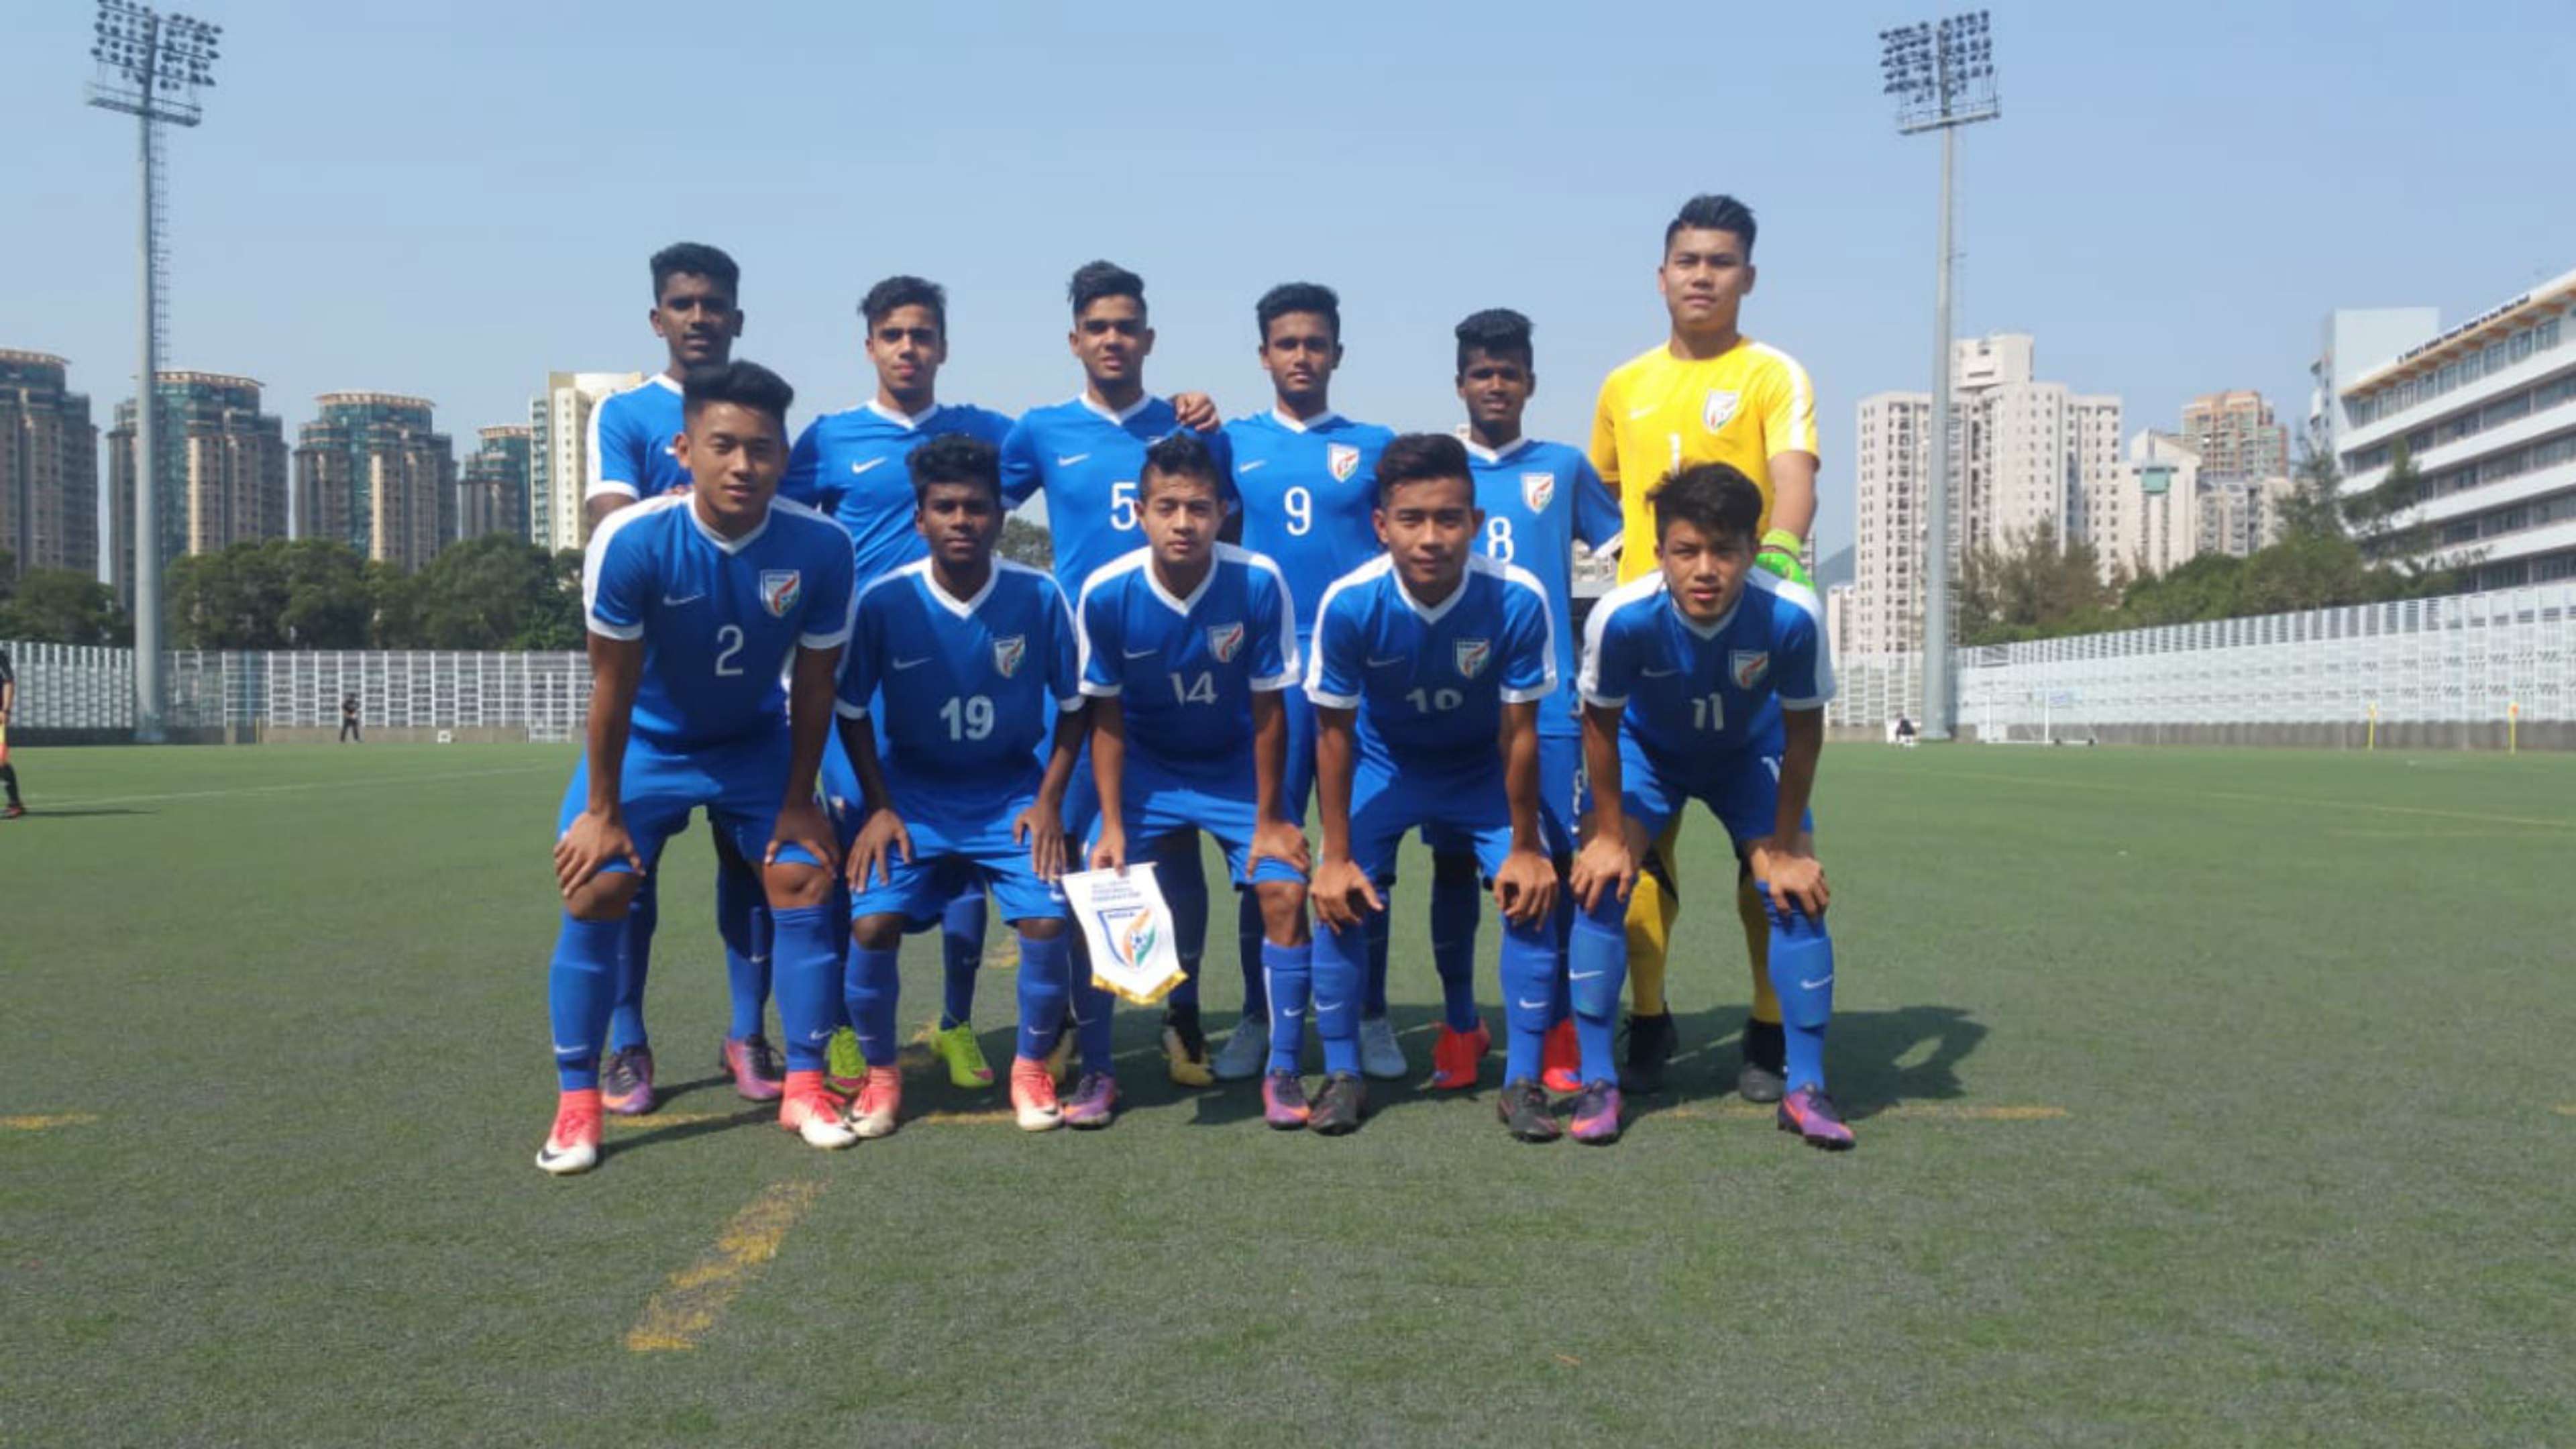 India U16 starting XI v Chinese Taipei in the Scoreboard at the Jockey Club International Youth Invitational Football Tournament